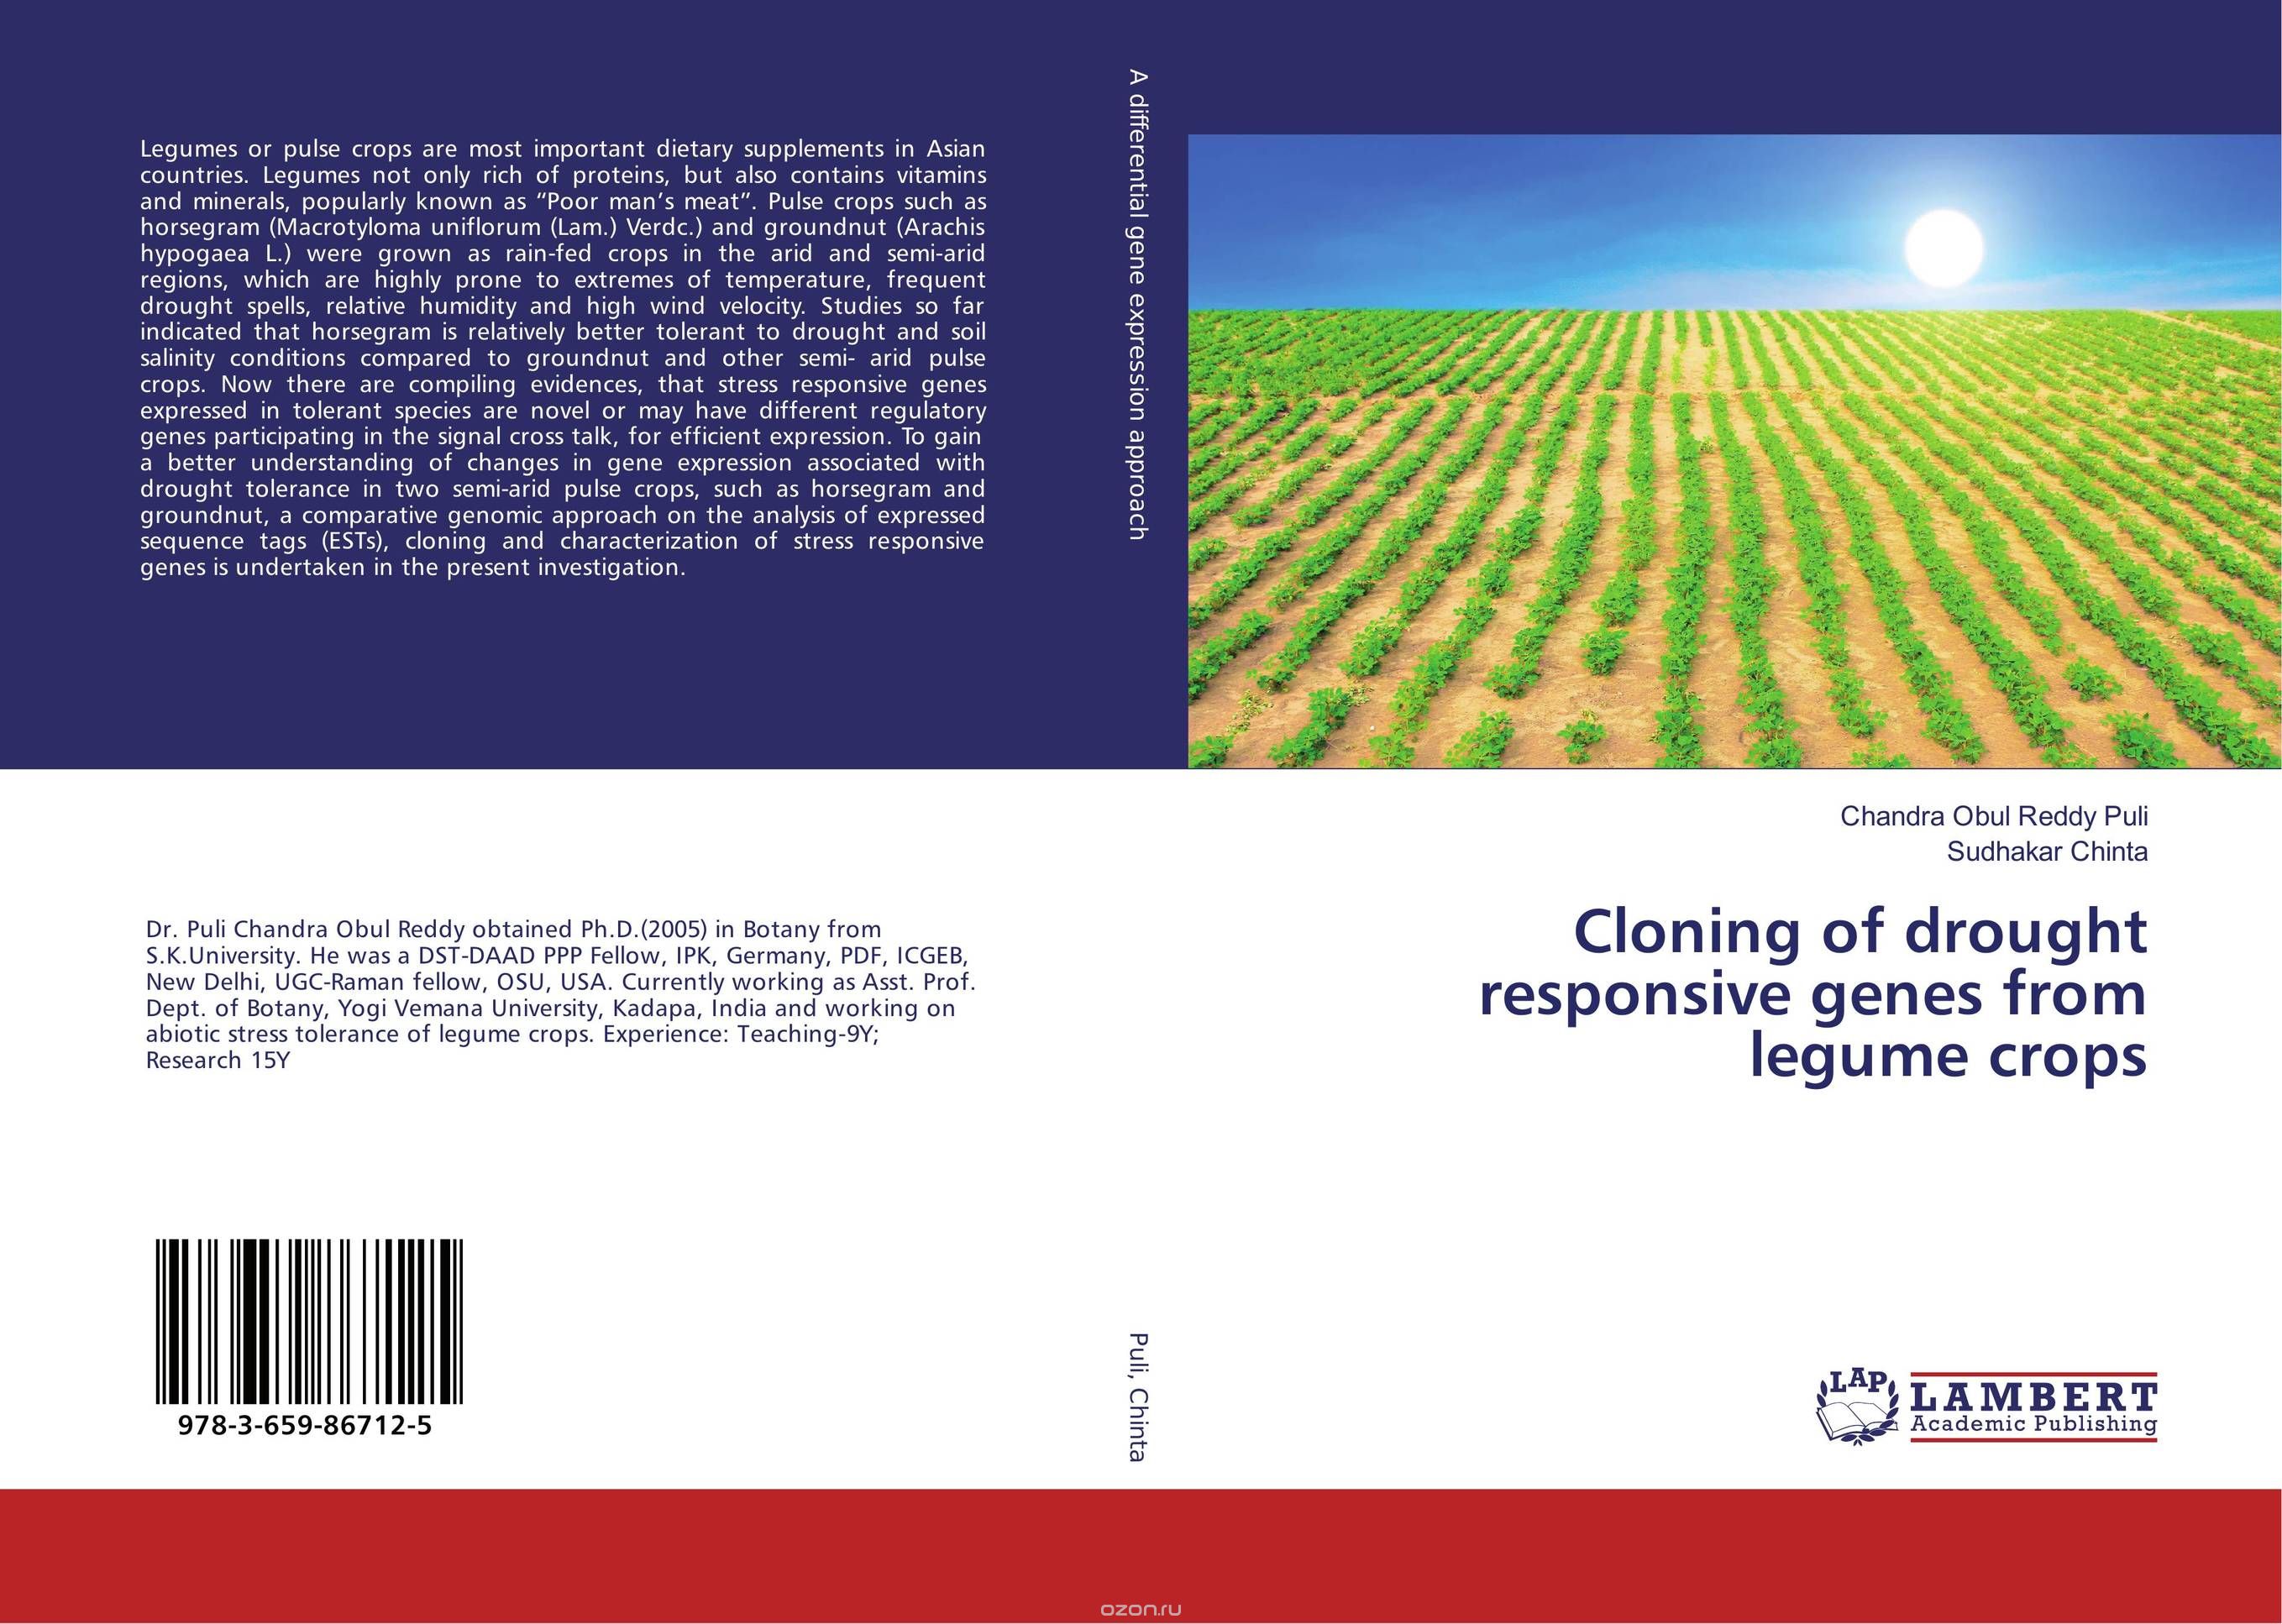 Скачать книгу "Cloning of drought responsive genes from legume crops"